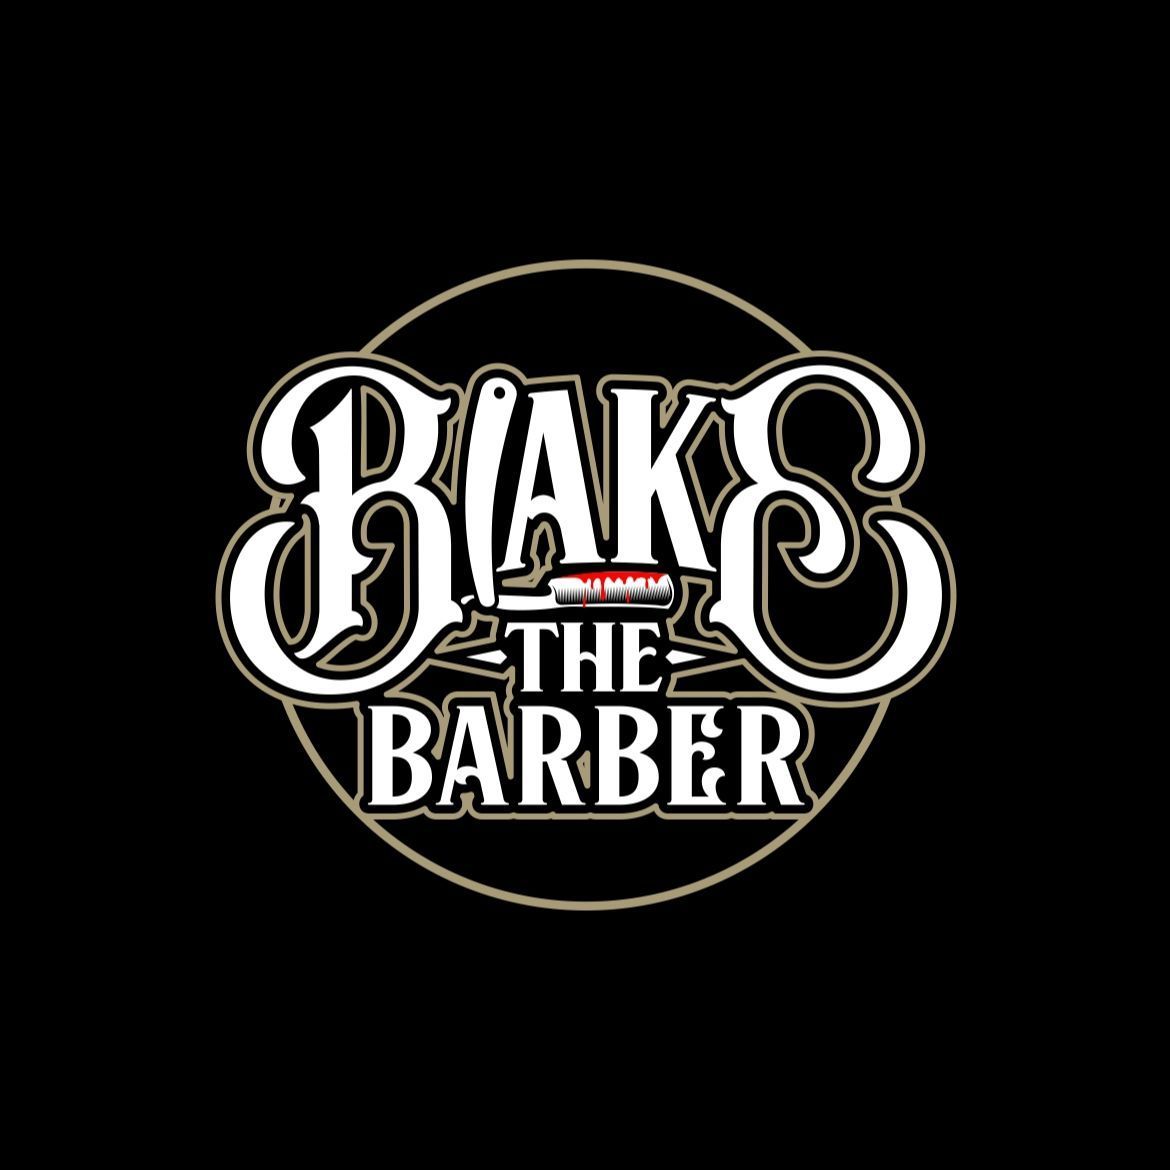 Blake's Barber Service, 6011 39th Ave, Kenosha, 53142